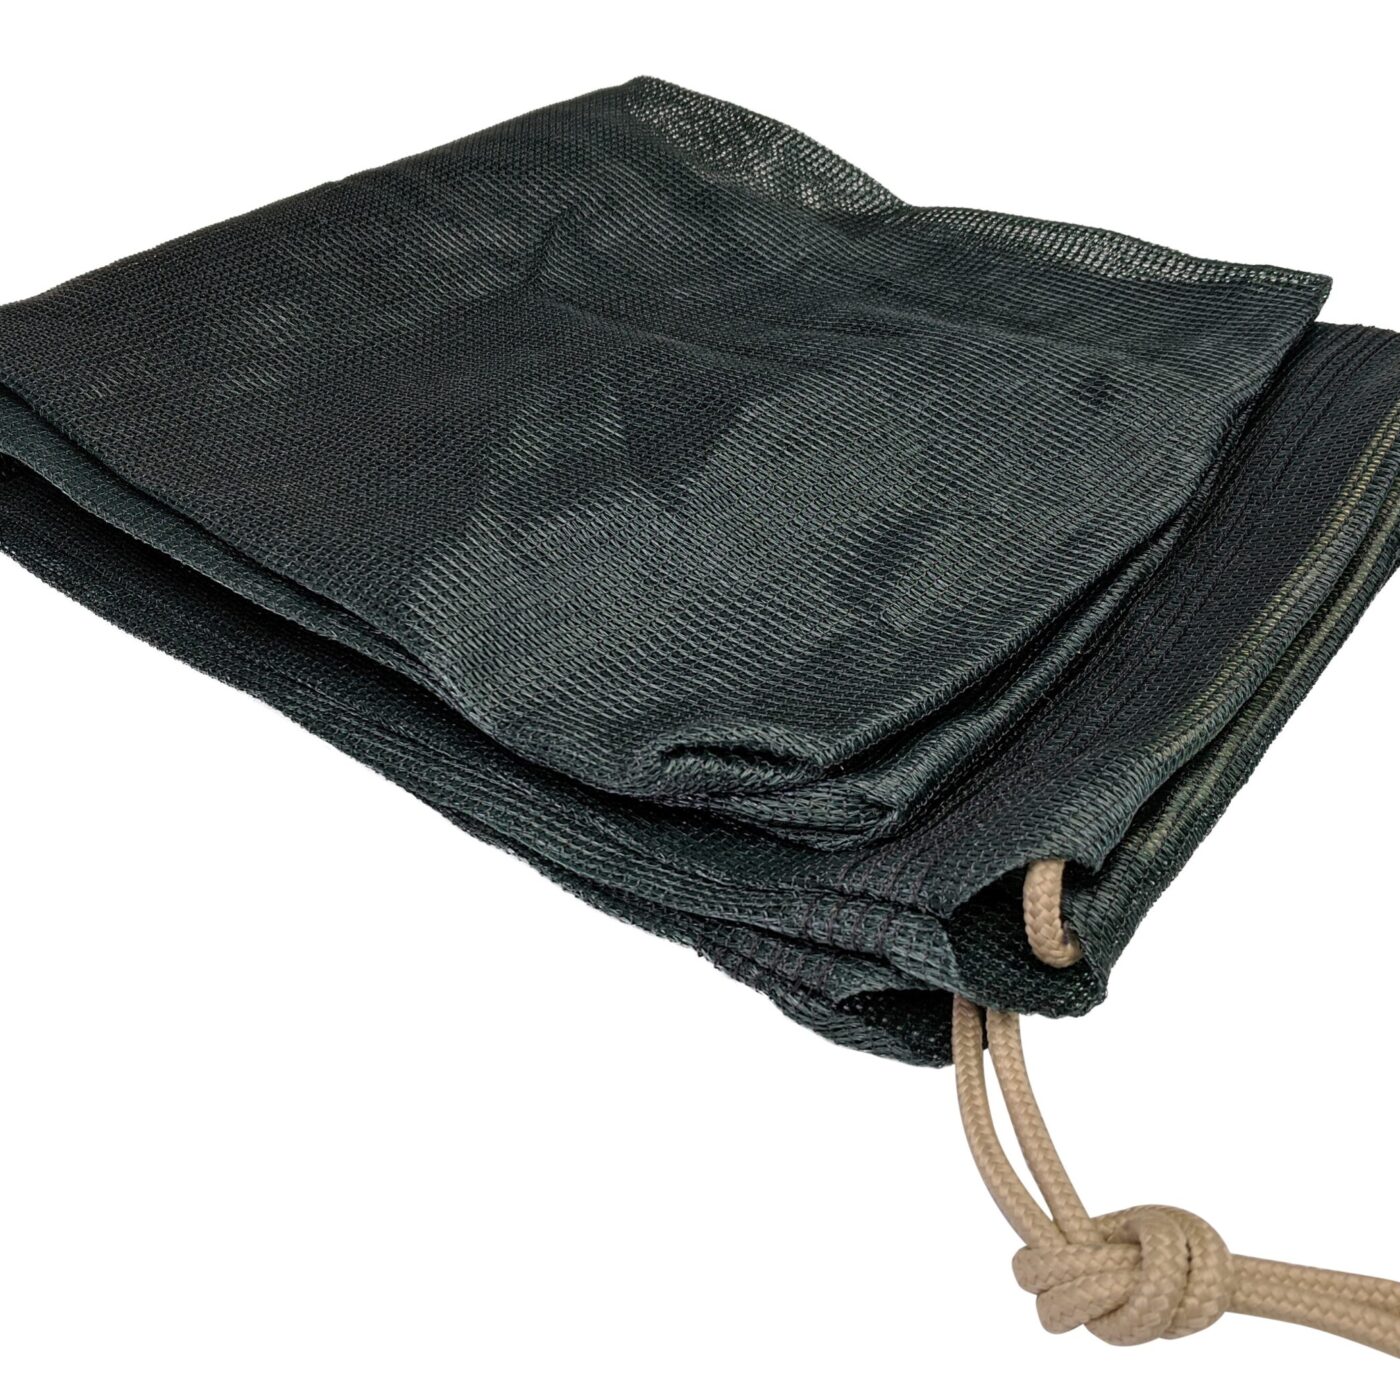 Net & Leaf Cover Storage Bag